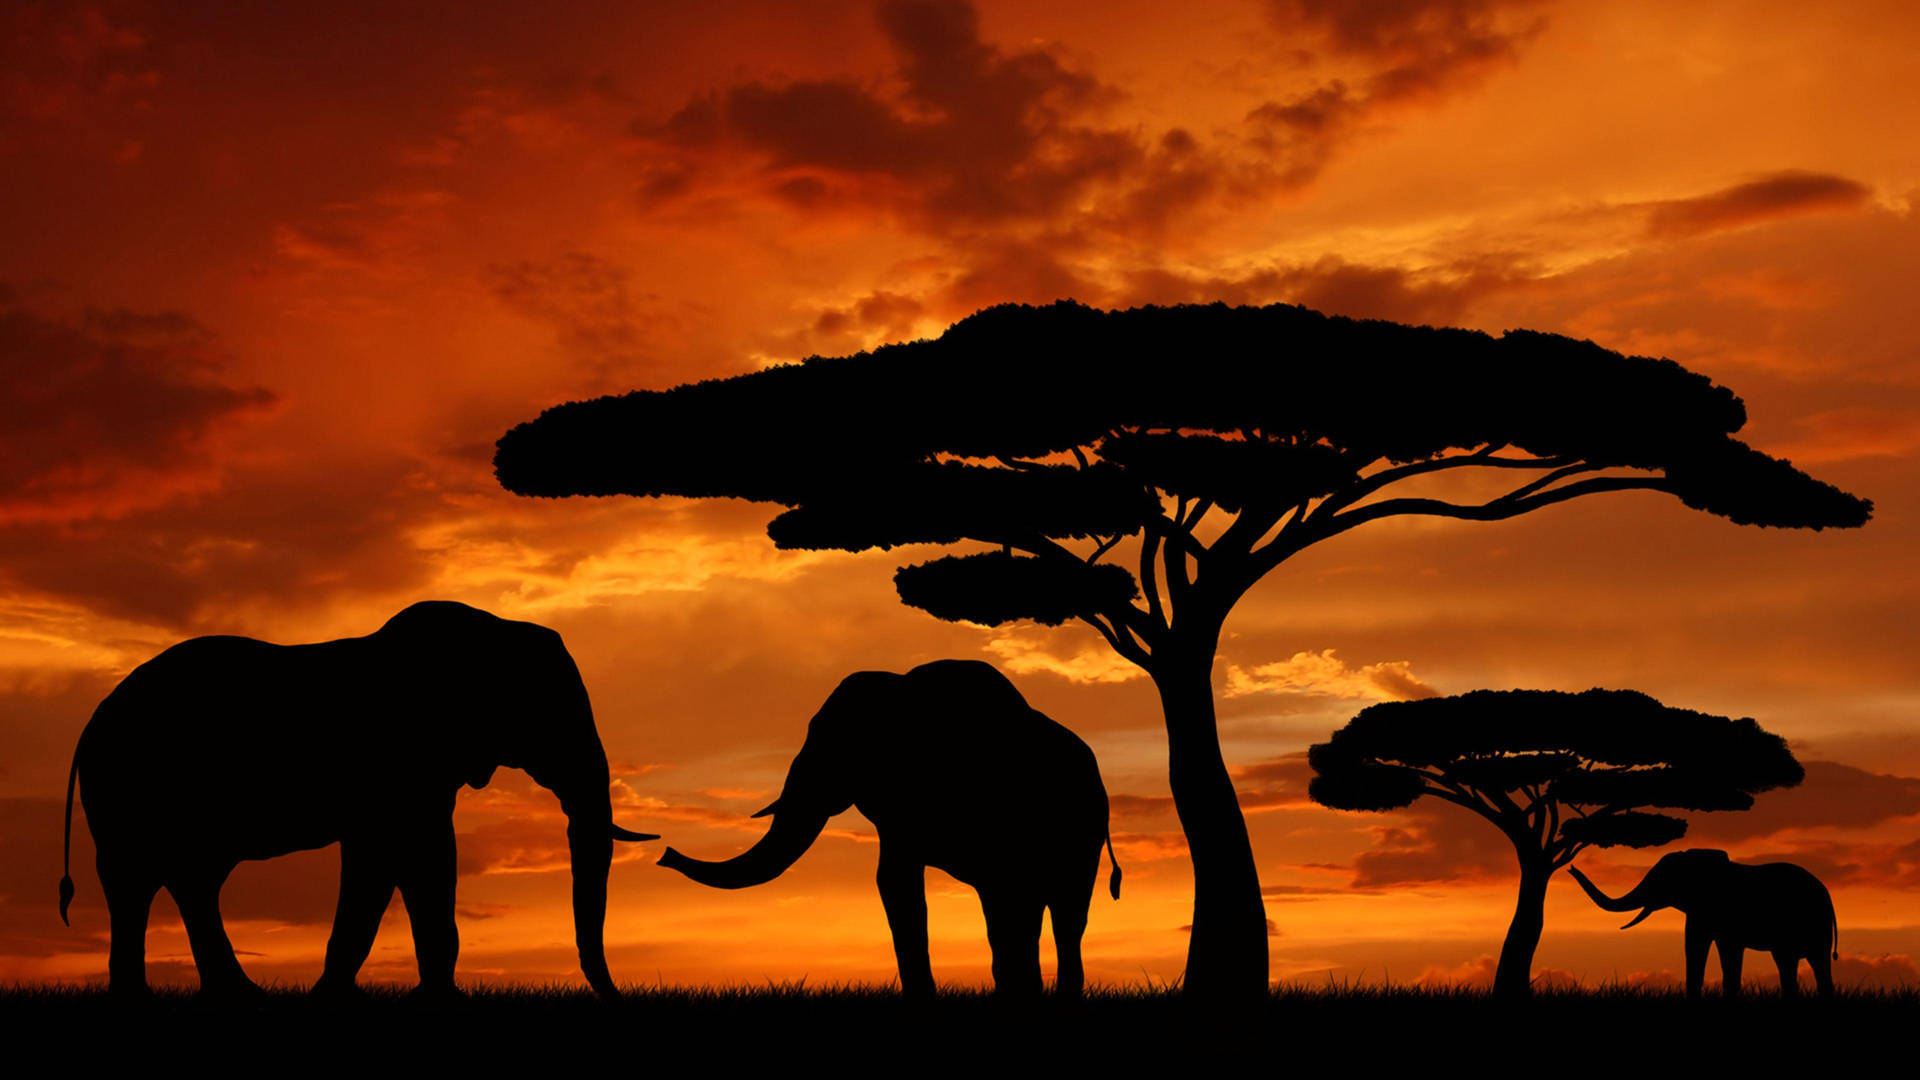 Elephants Silhouette In Africa